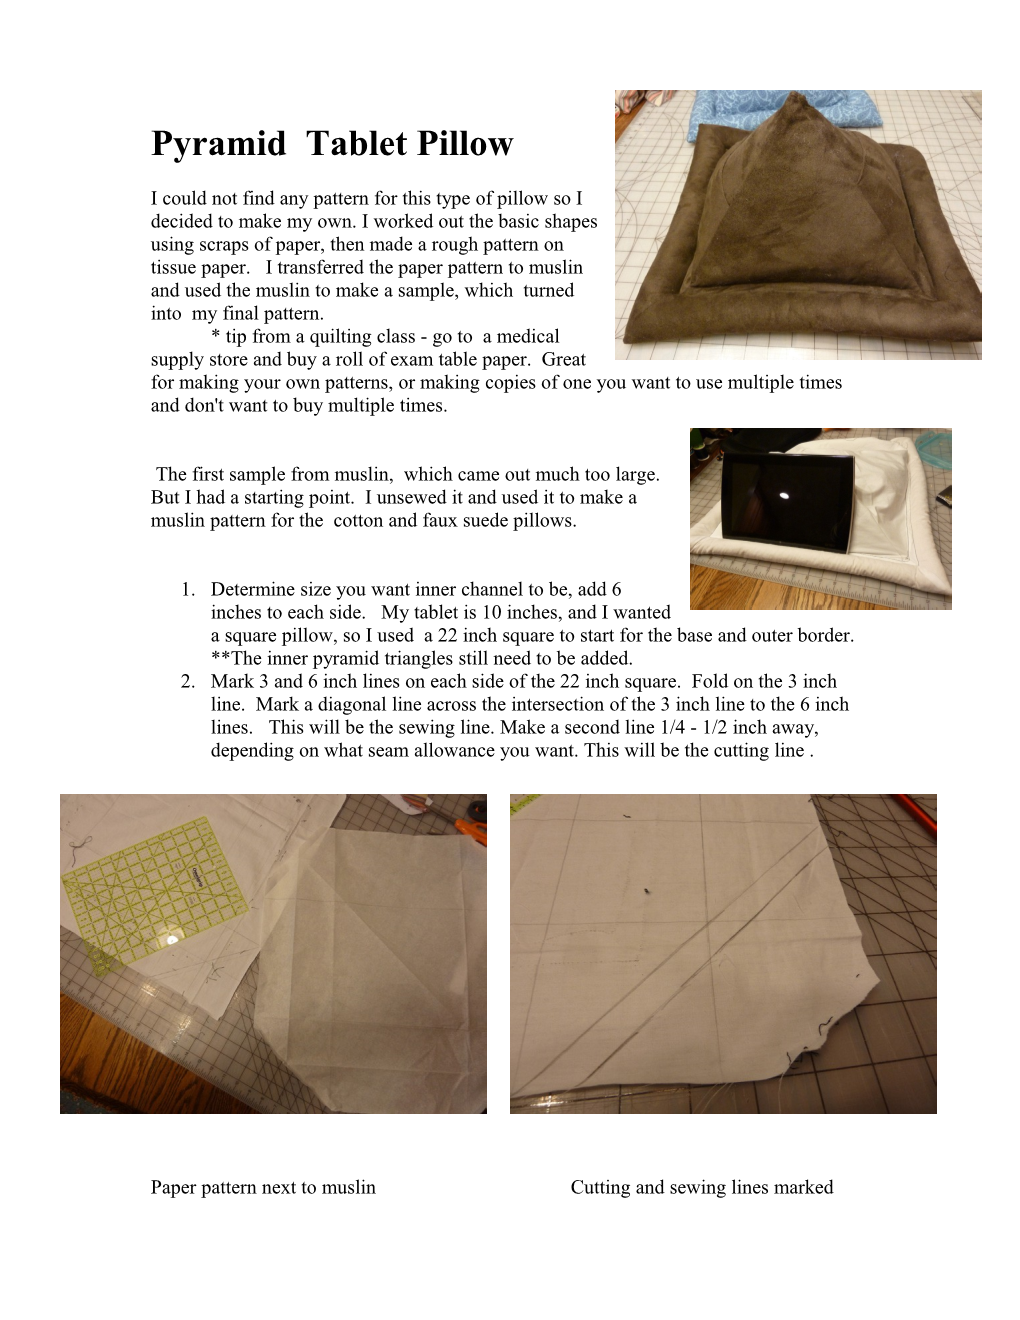 Pyramid Tablet Pillow Tutorial